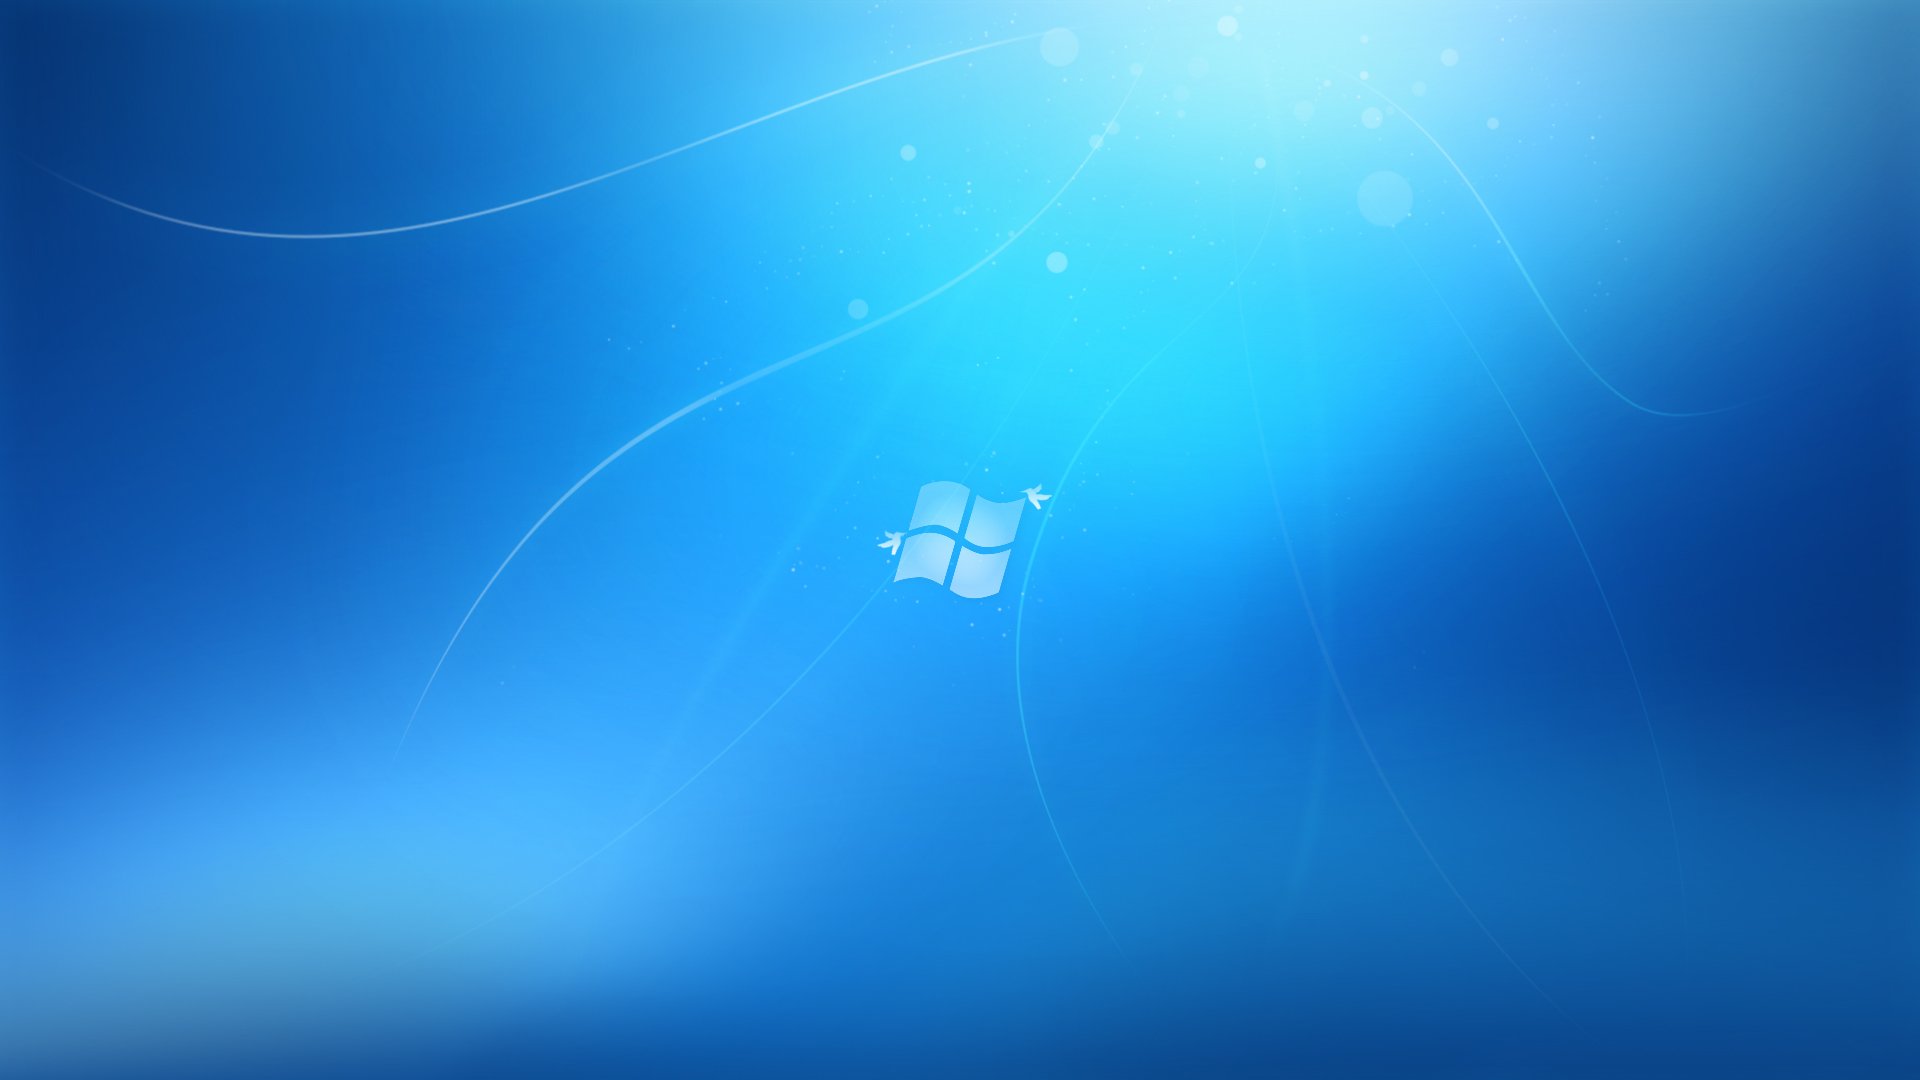 Windows 7 Blue 1080p HD Wallpapers HD Wallpapers 1920x1080